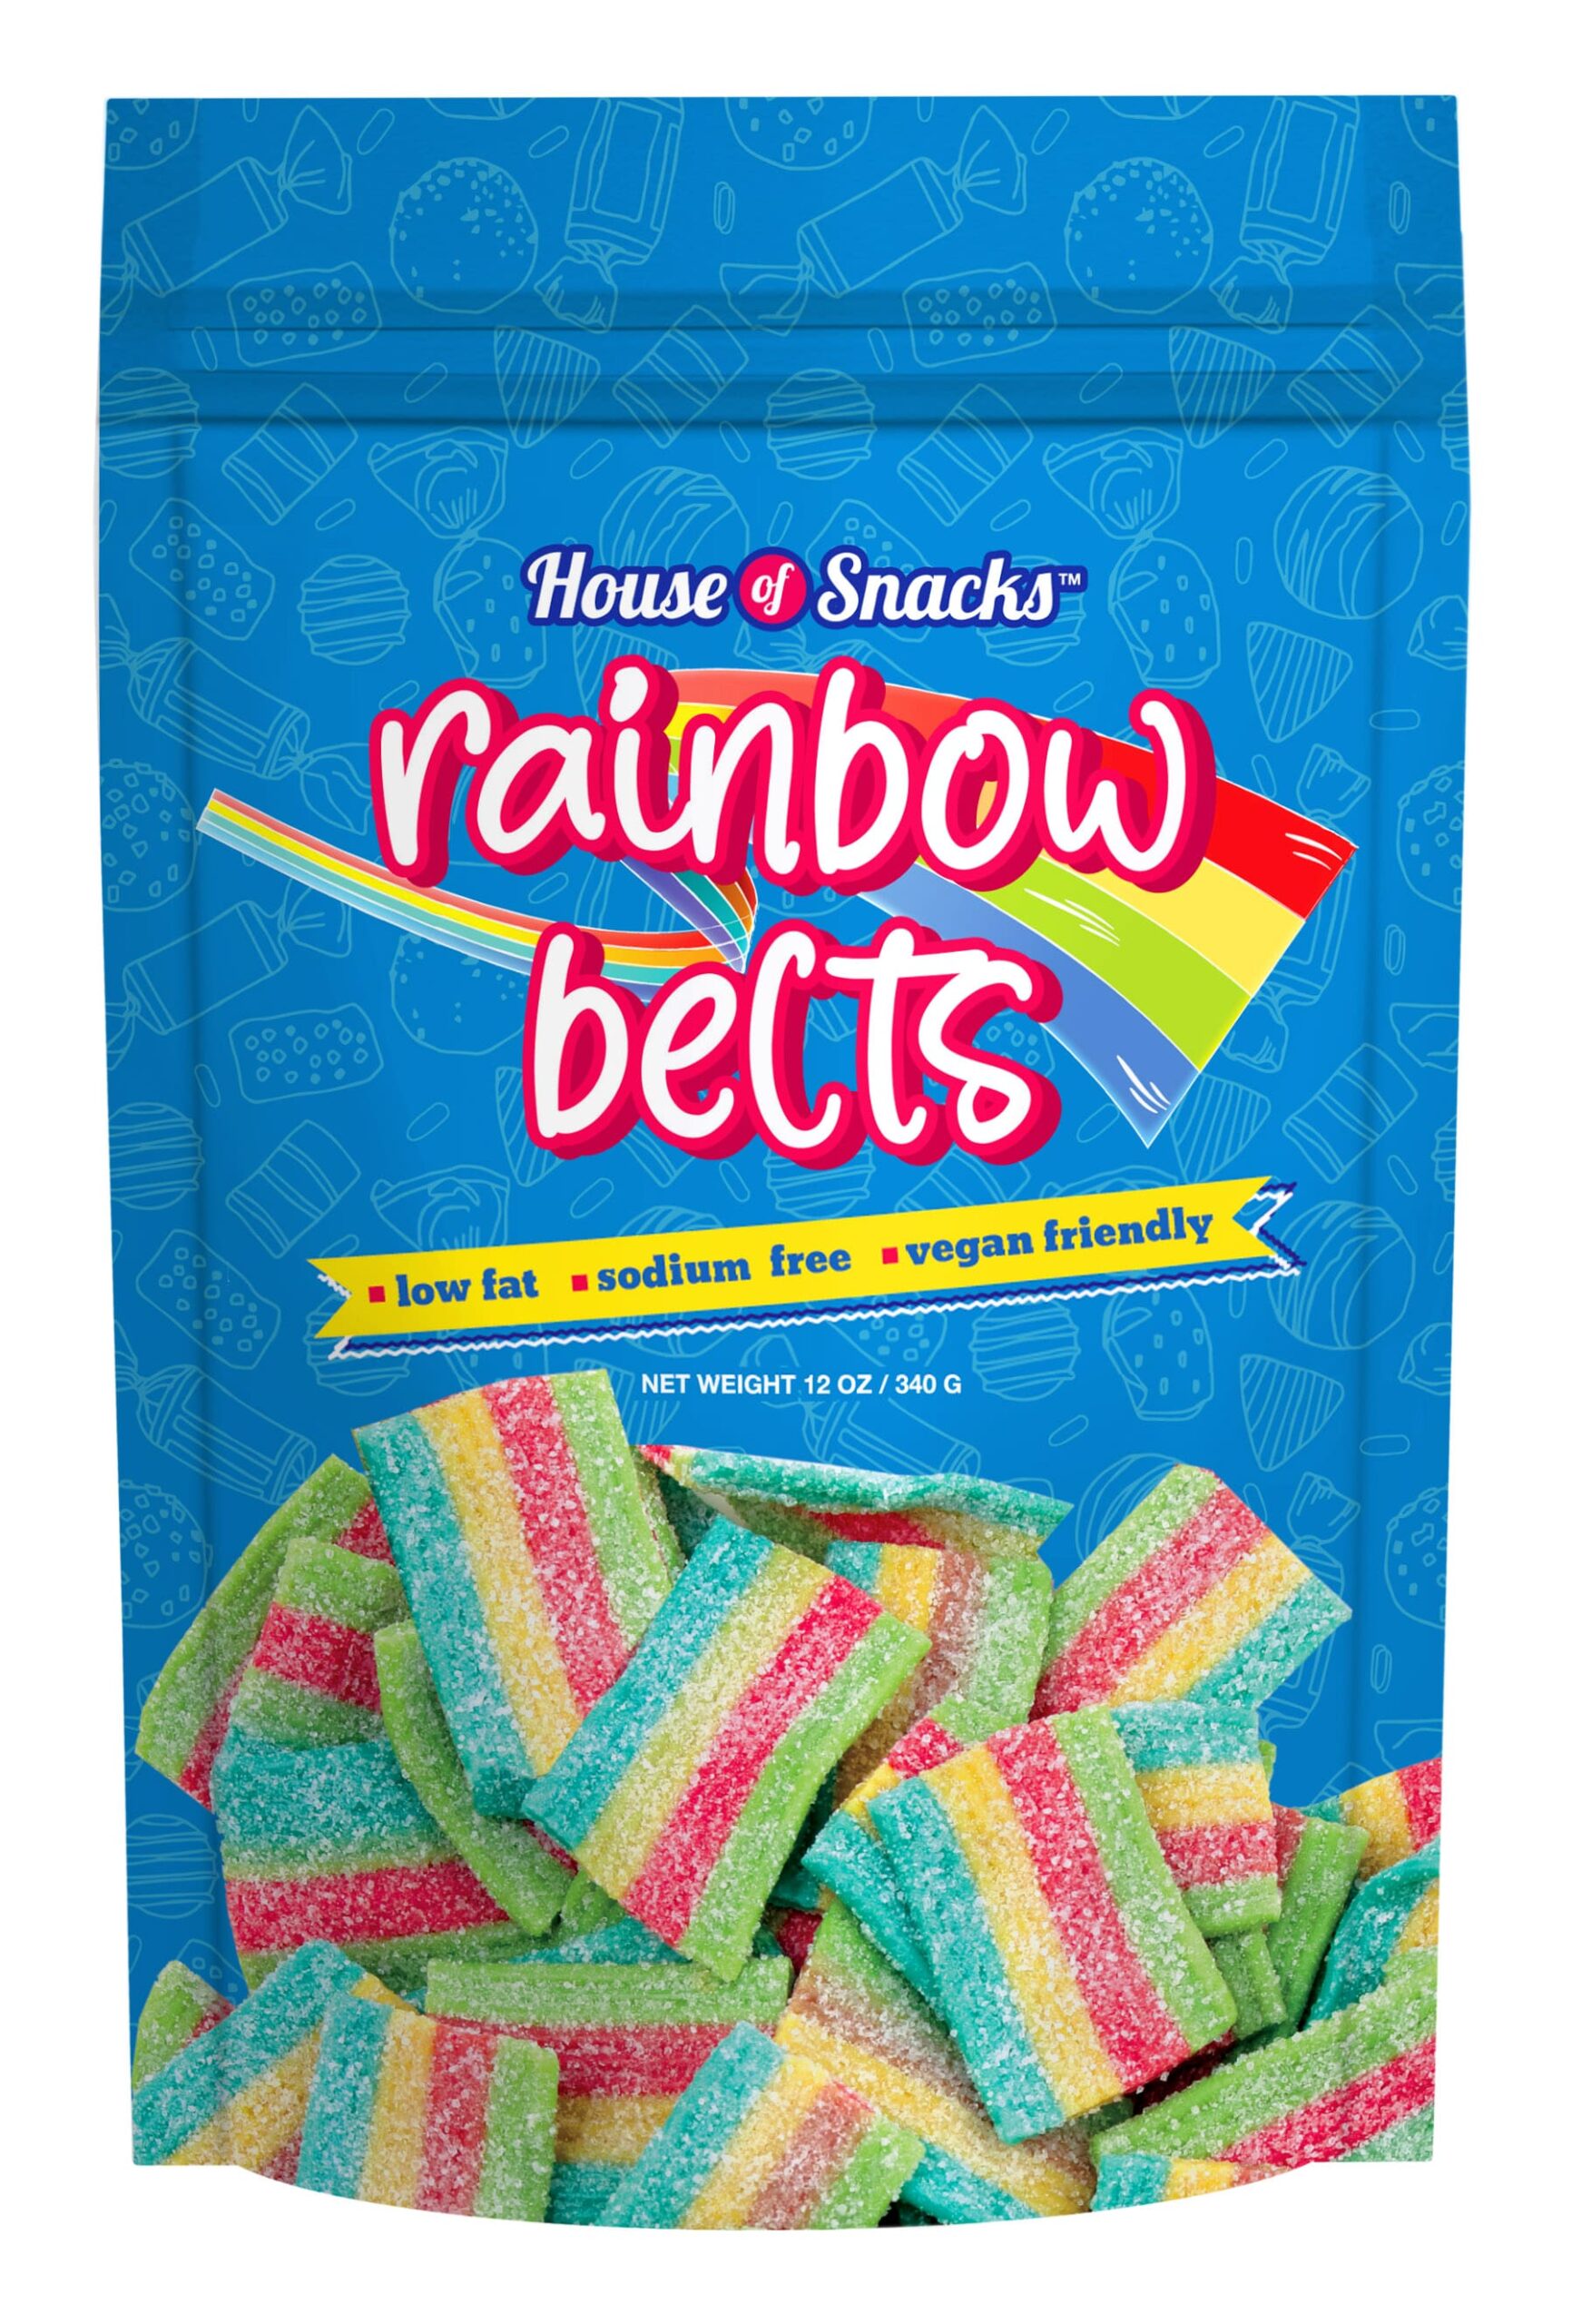 Rainbow Belts